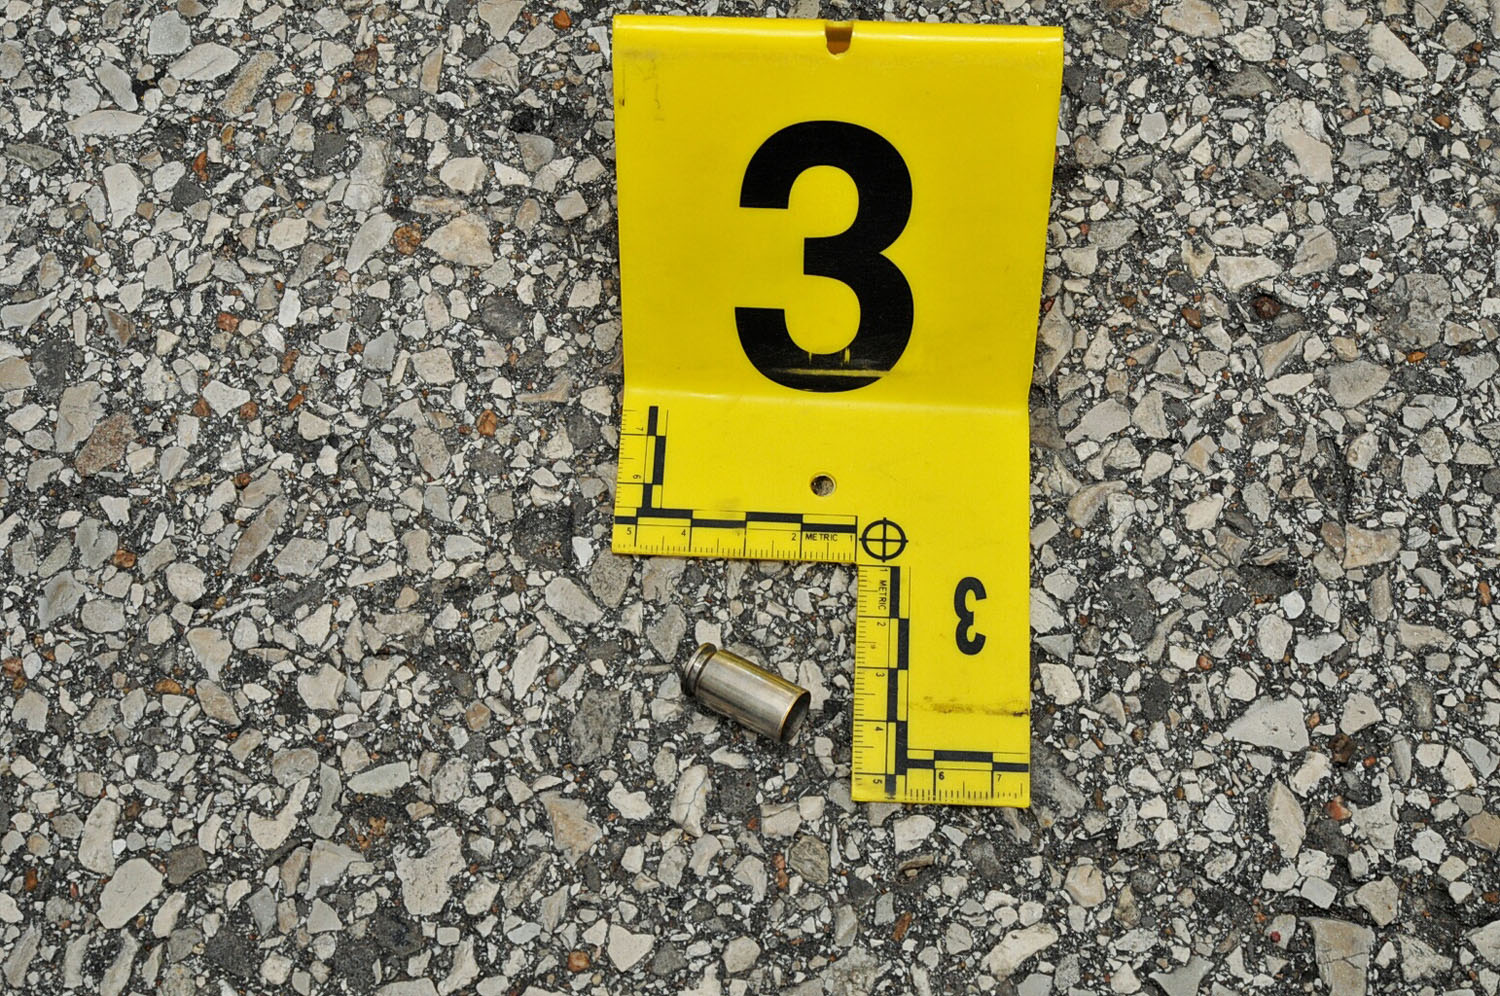 This photograph shows a casing from a bullet fired from Ferguson Police Officer Darren Wilson's gun.